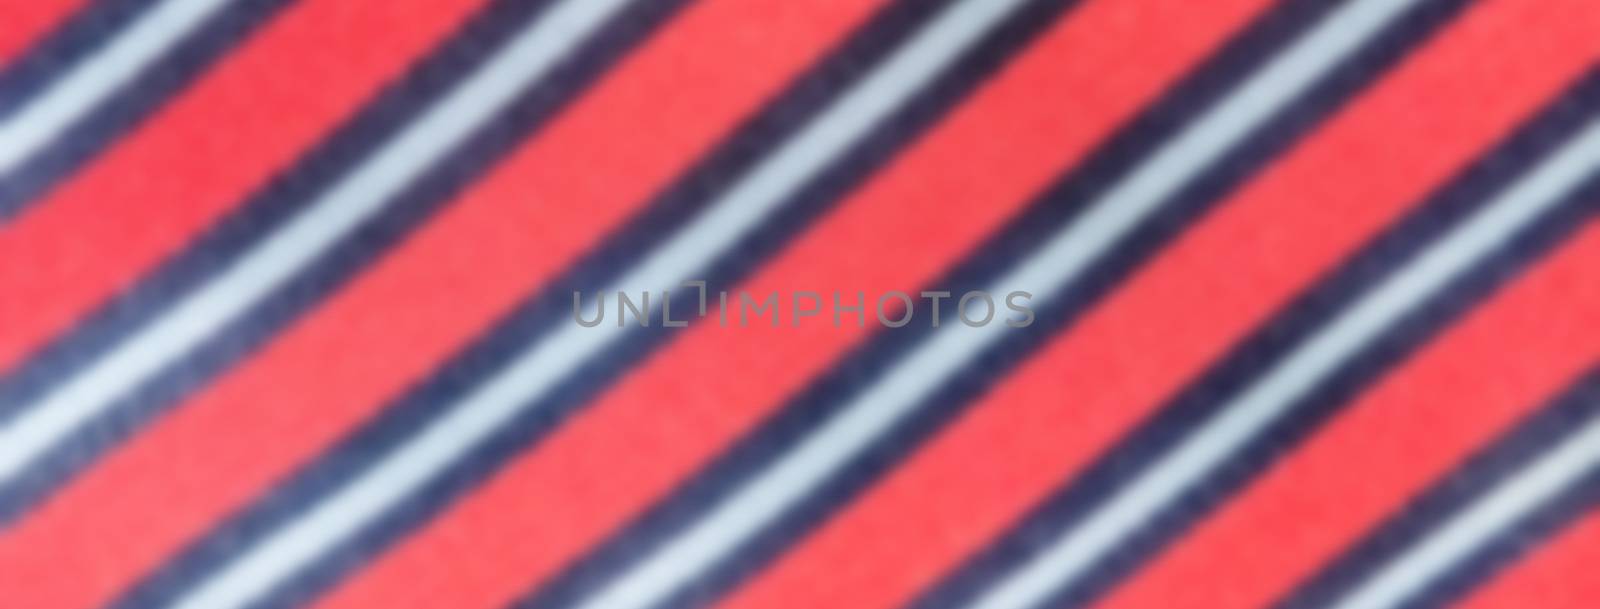 Defocused background of a necktie texture by marcorubino